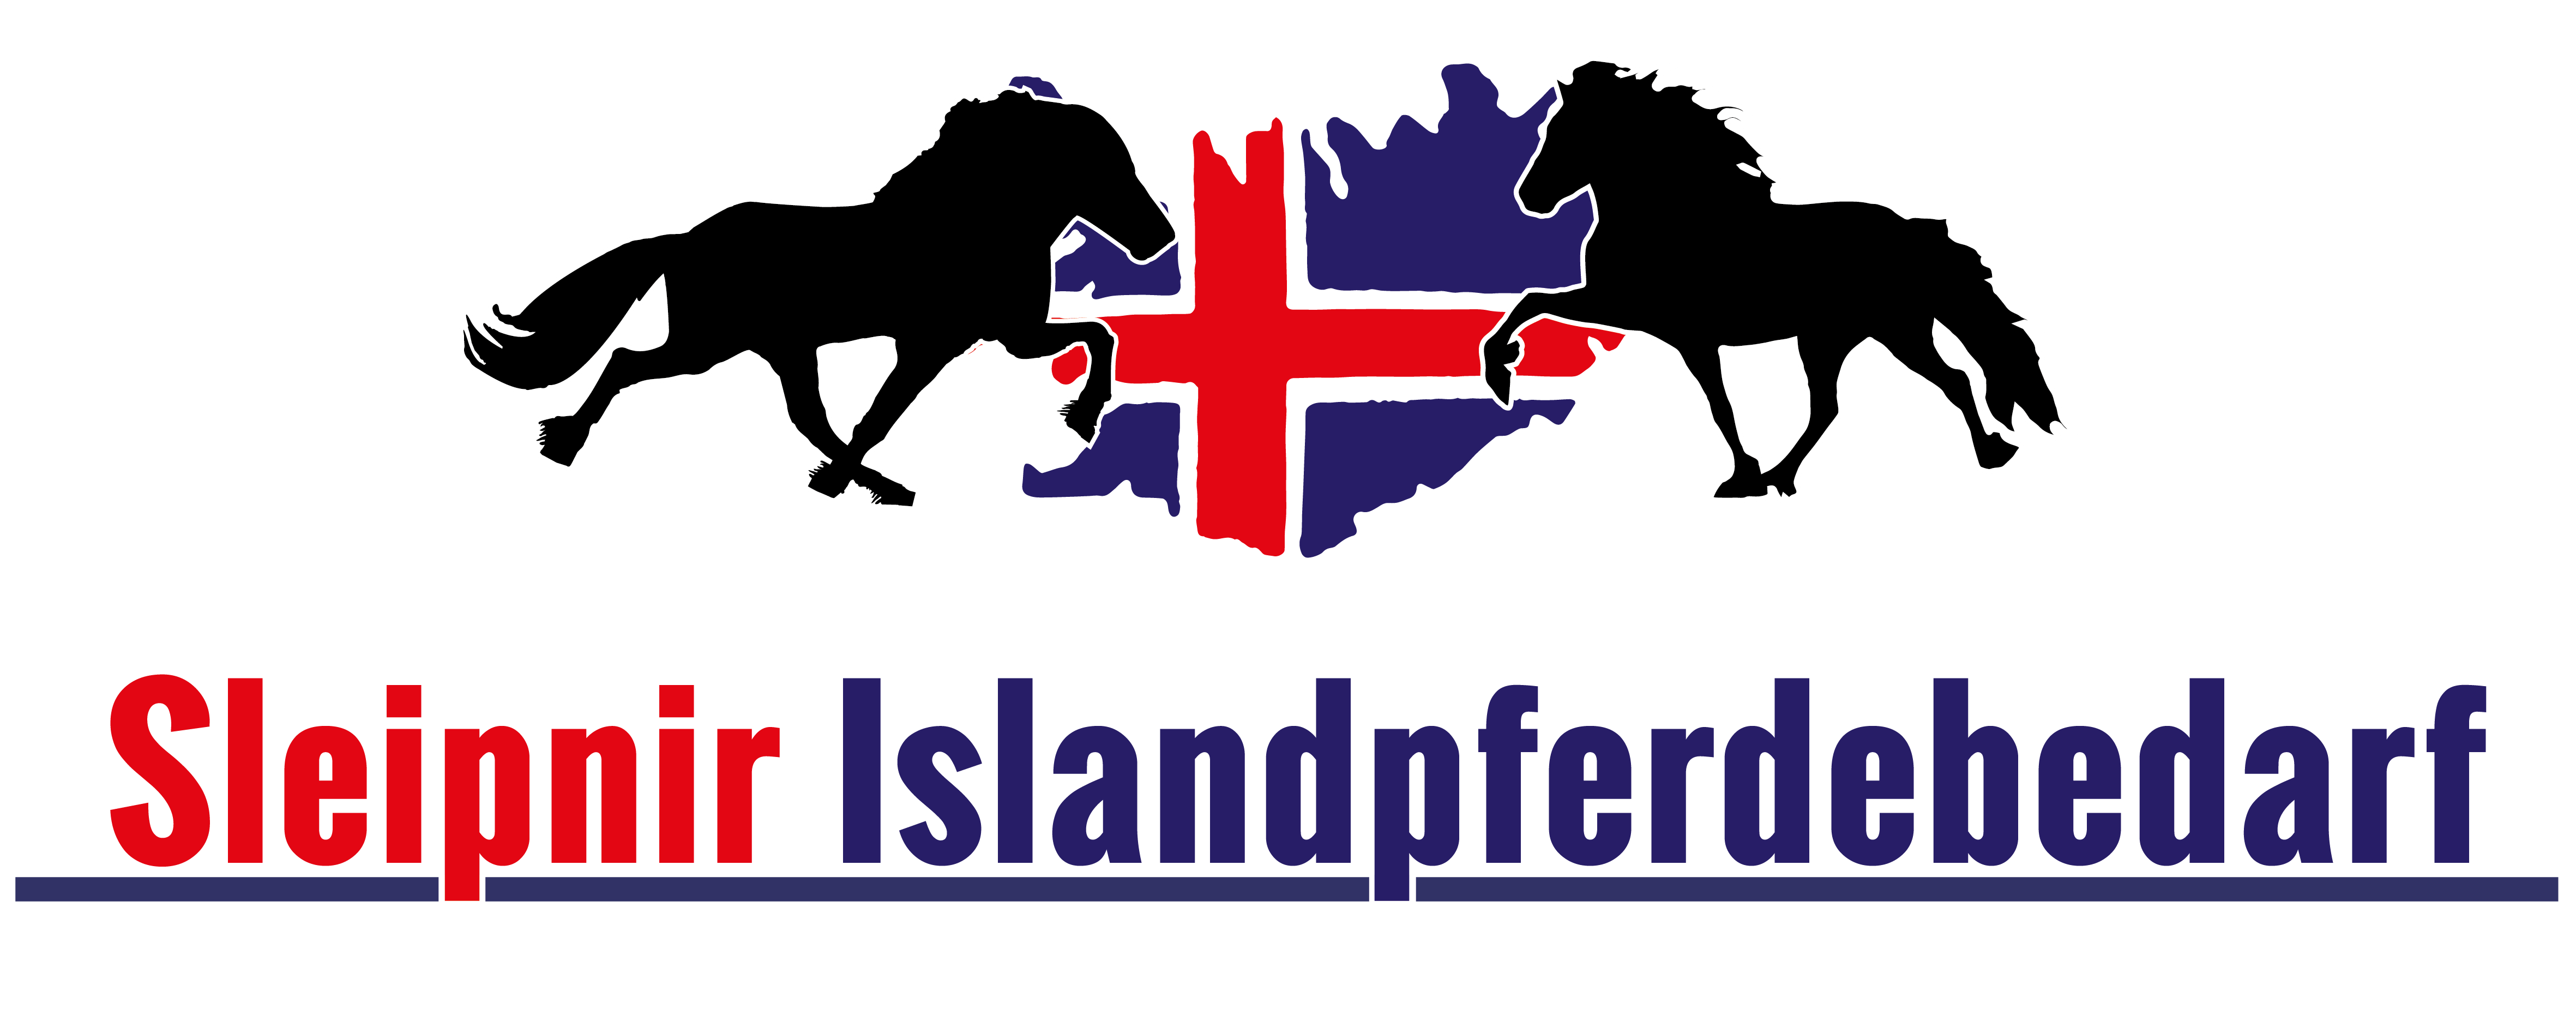 Sleipnir Islandpferdebedarf GbR